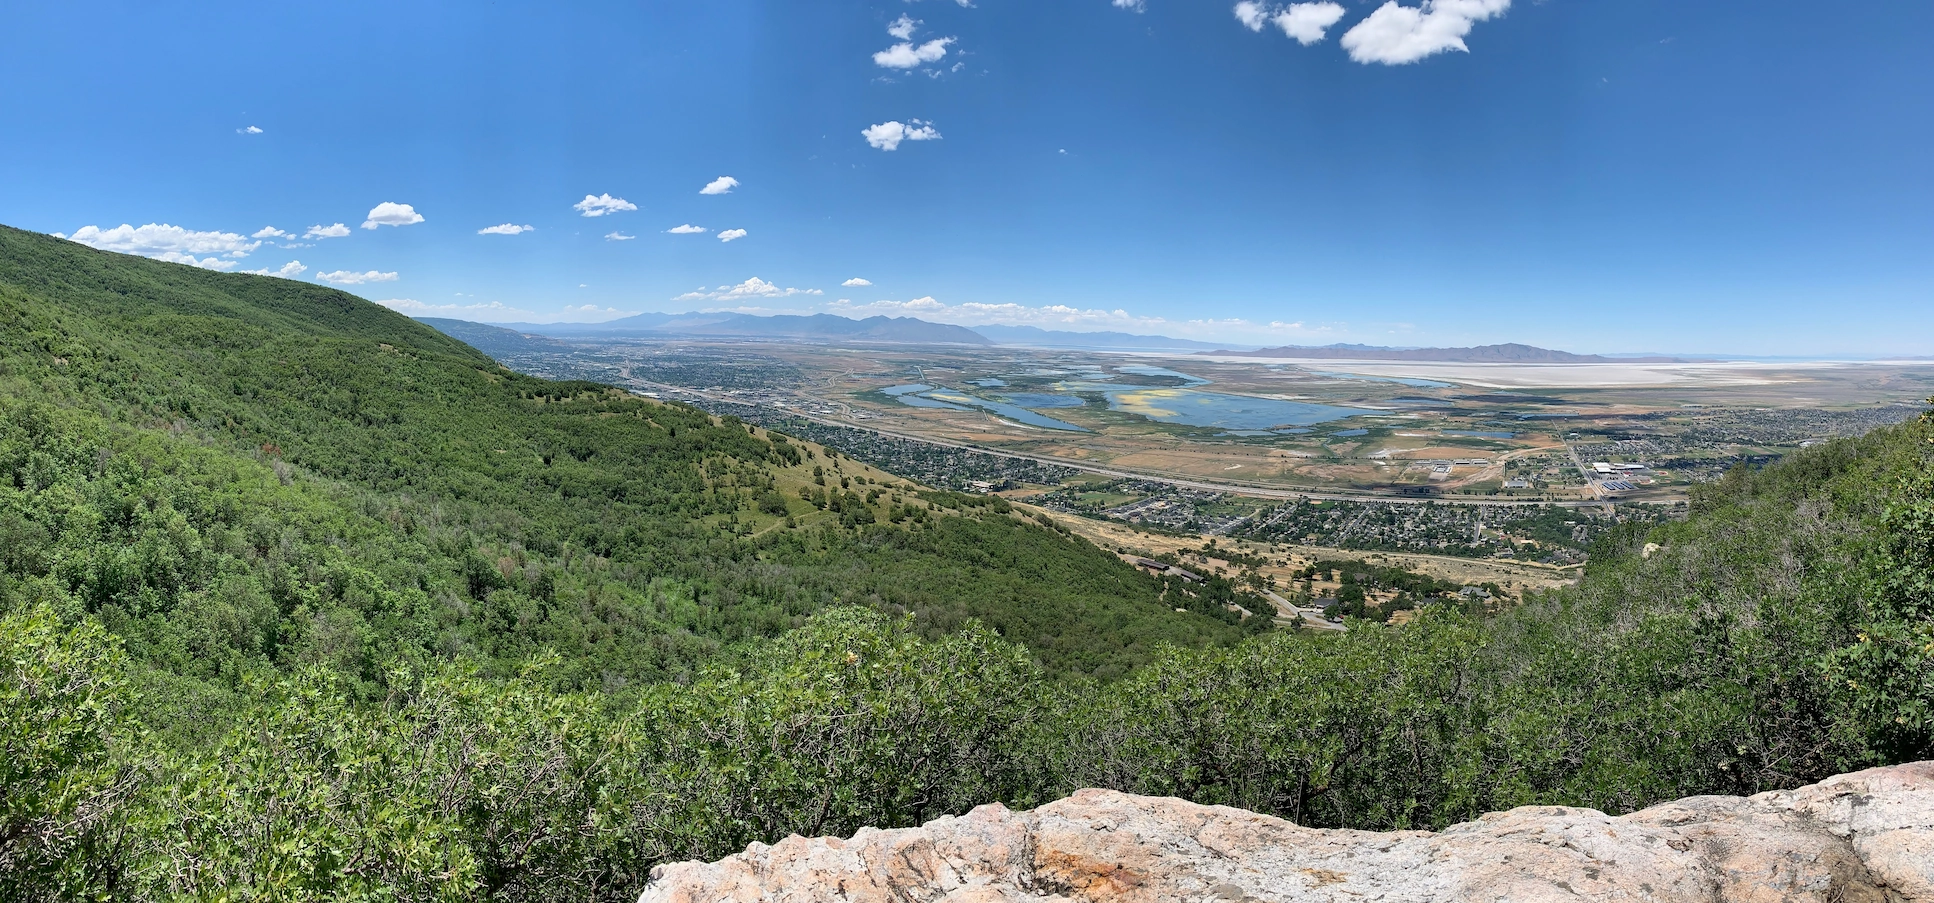 View overlooking Farmington, Utah